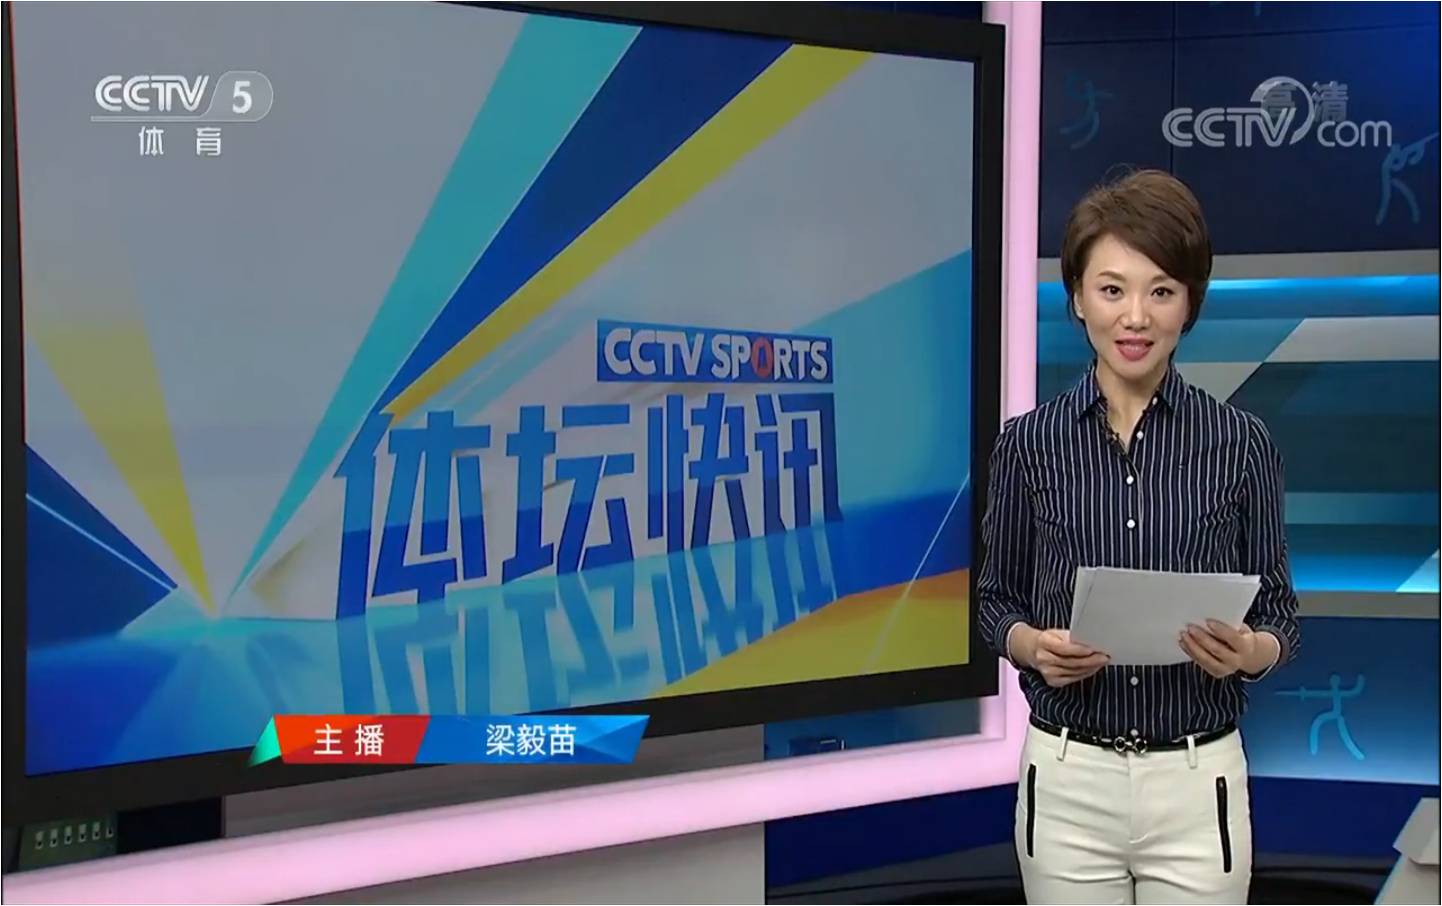 CCTV5+频道将于8月18日开播(图)